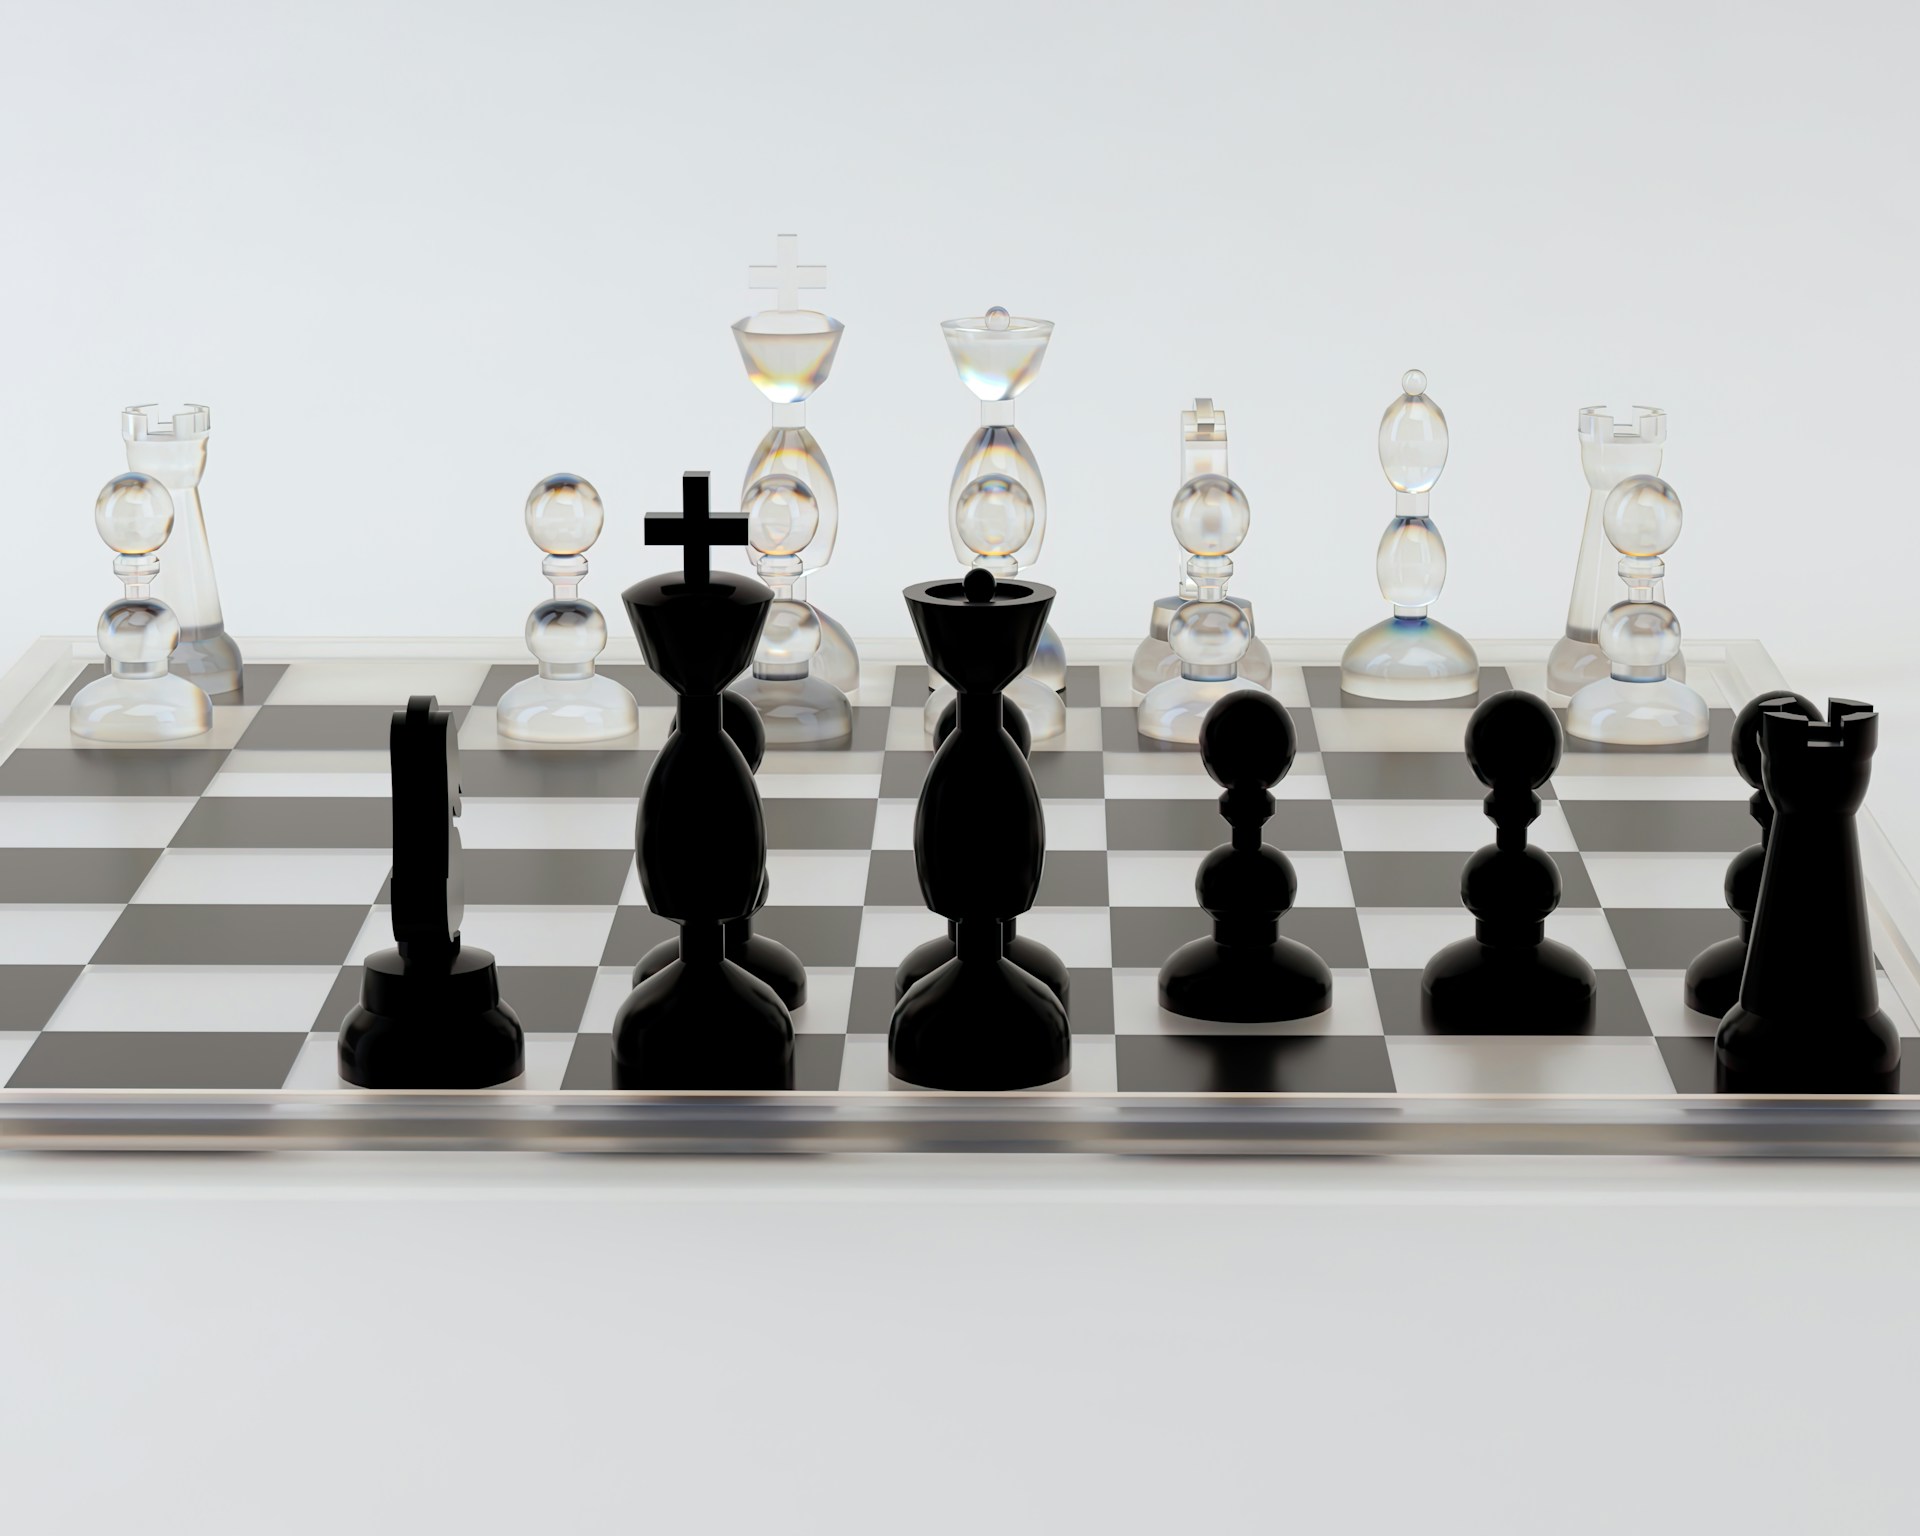 Heading image (chess)